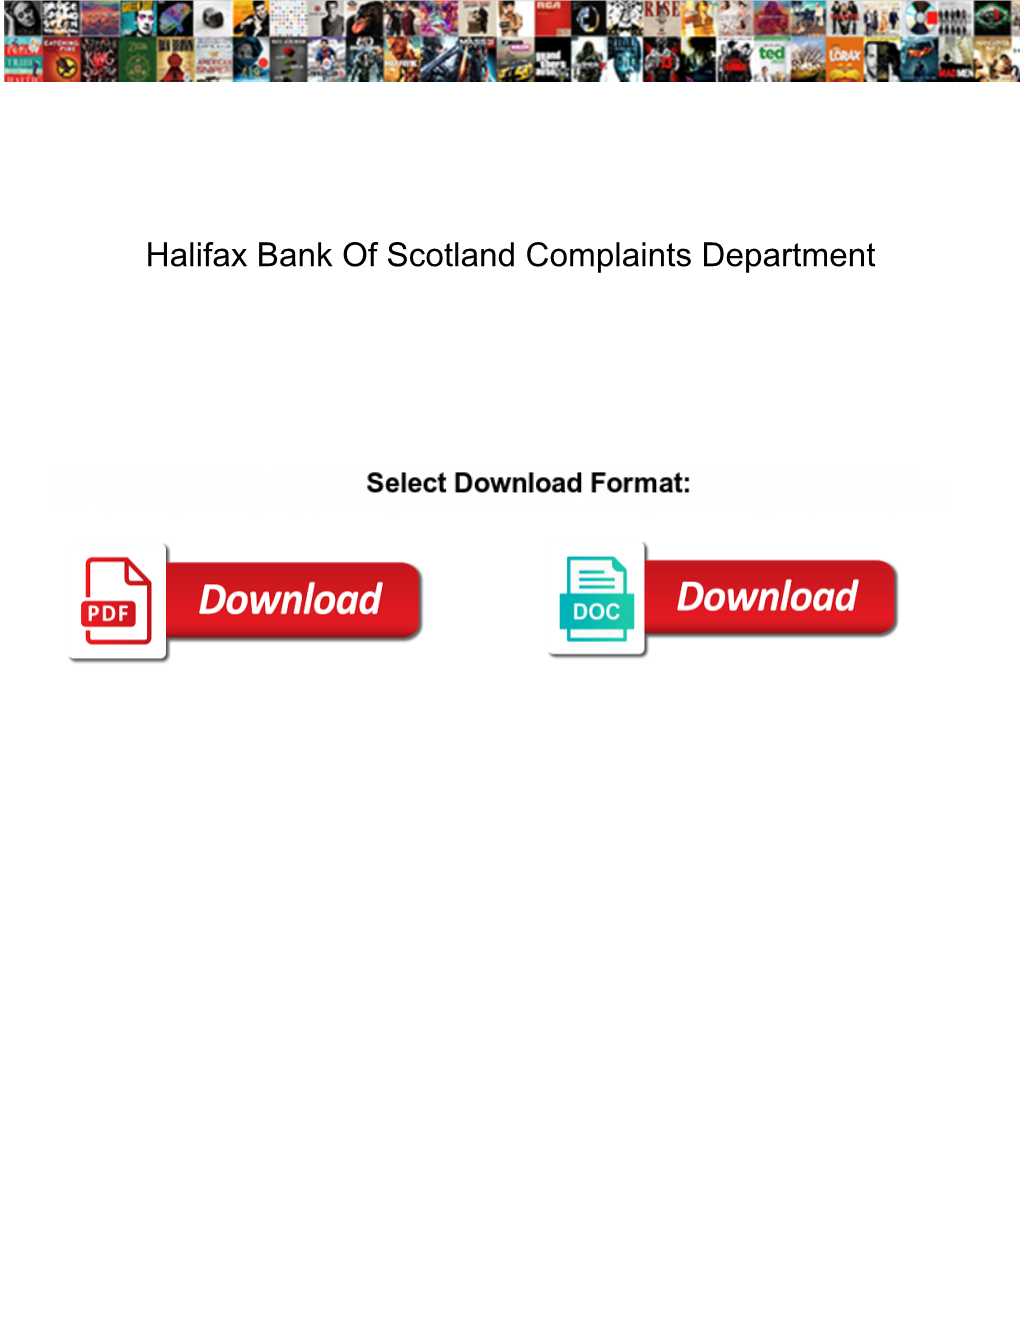 Halifax Bank of Scotland Complaints Department